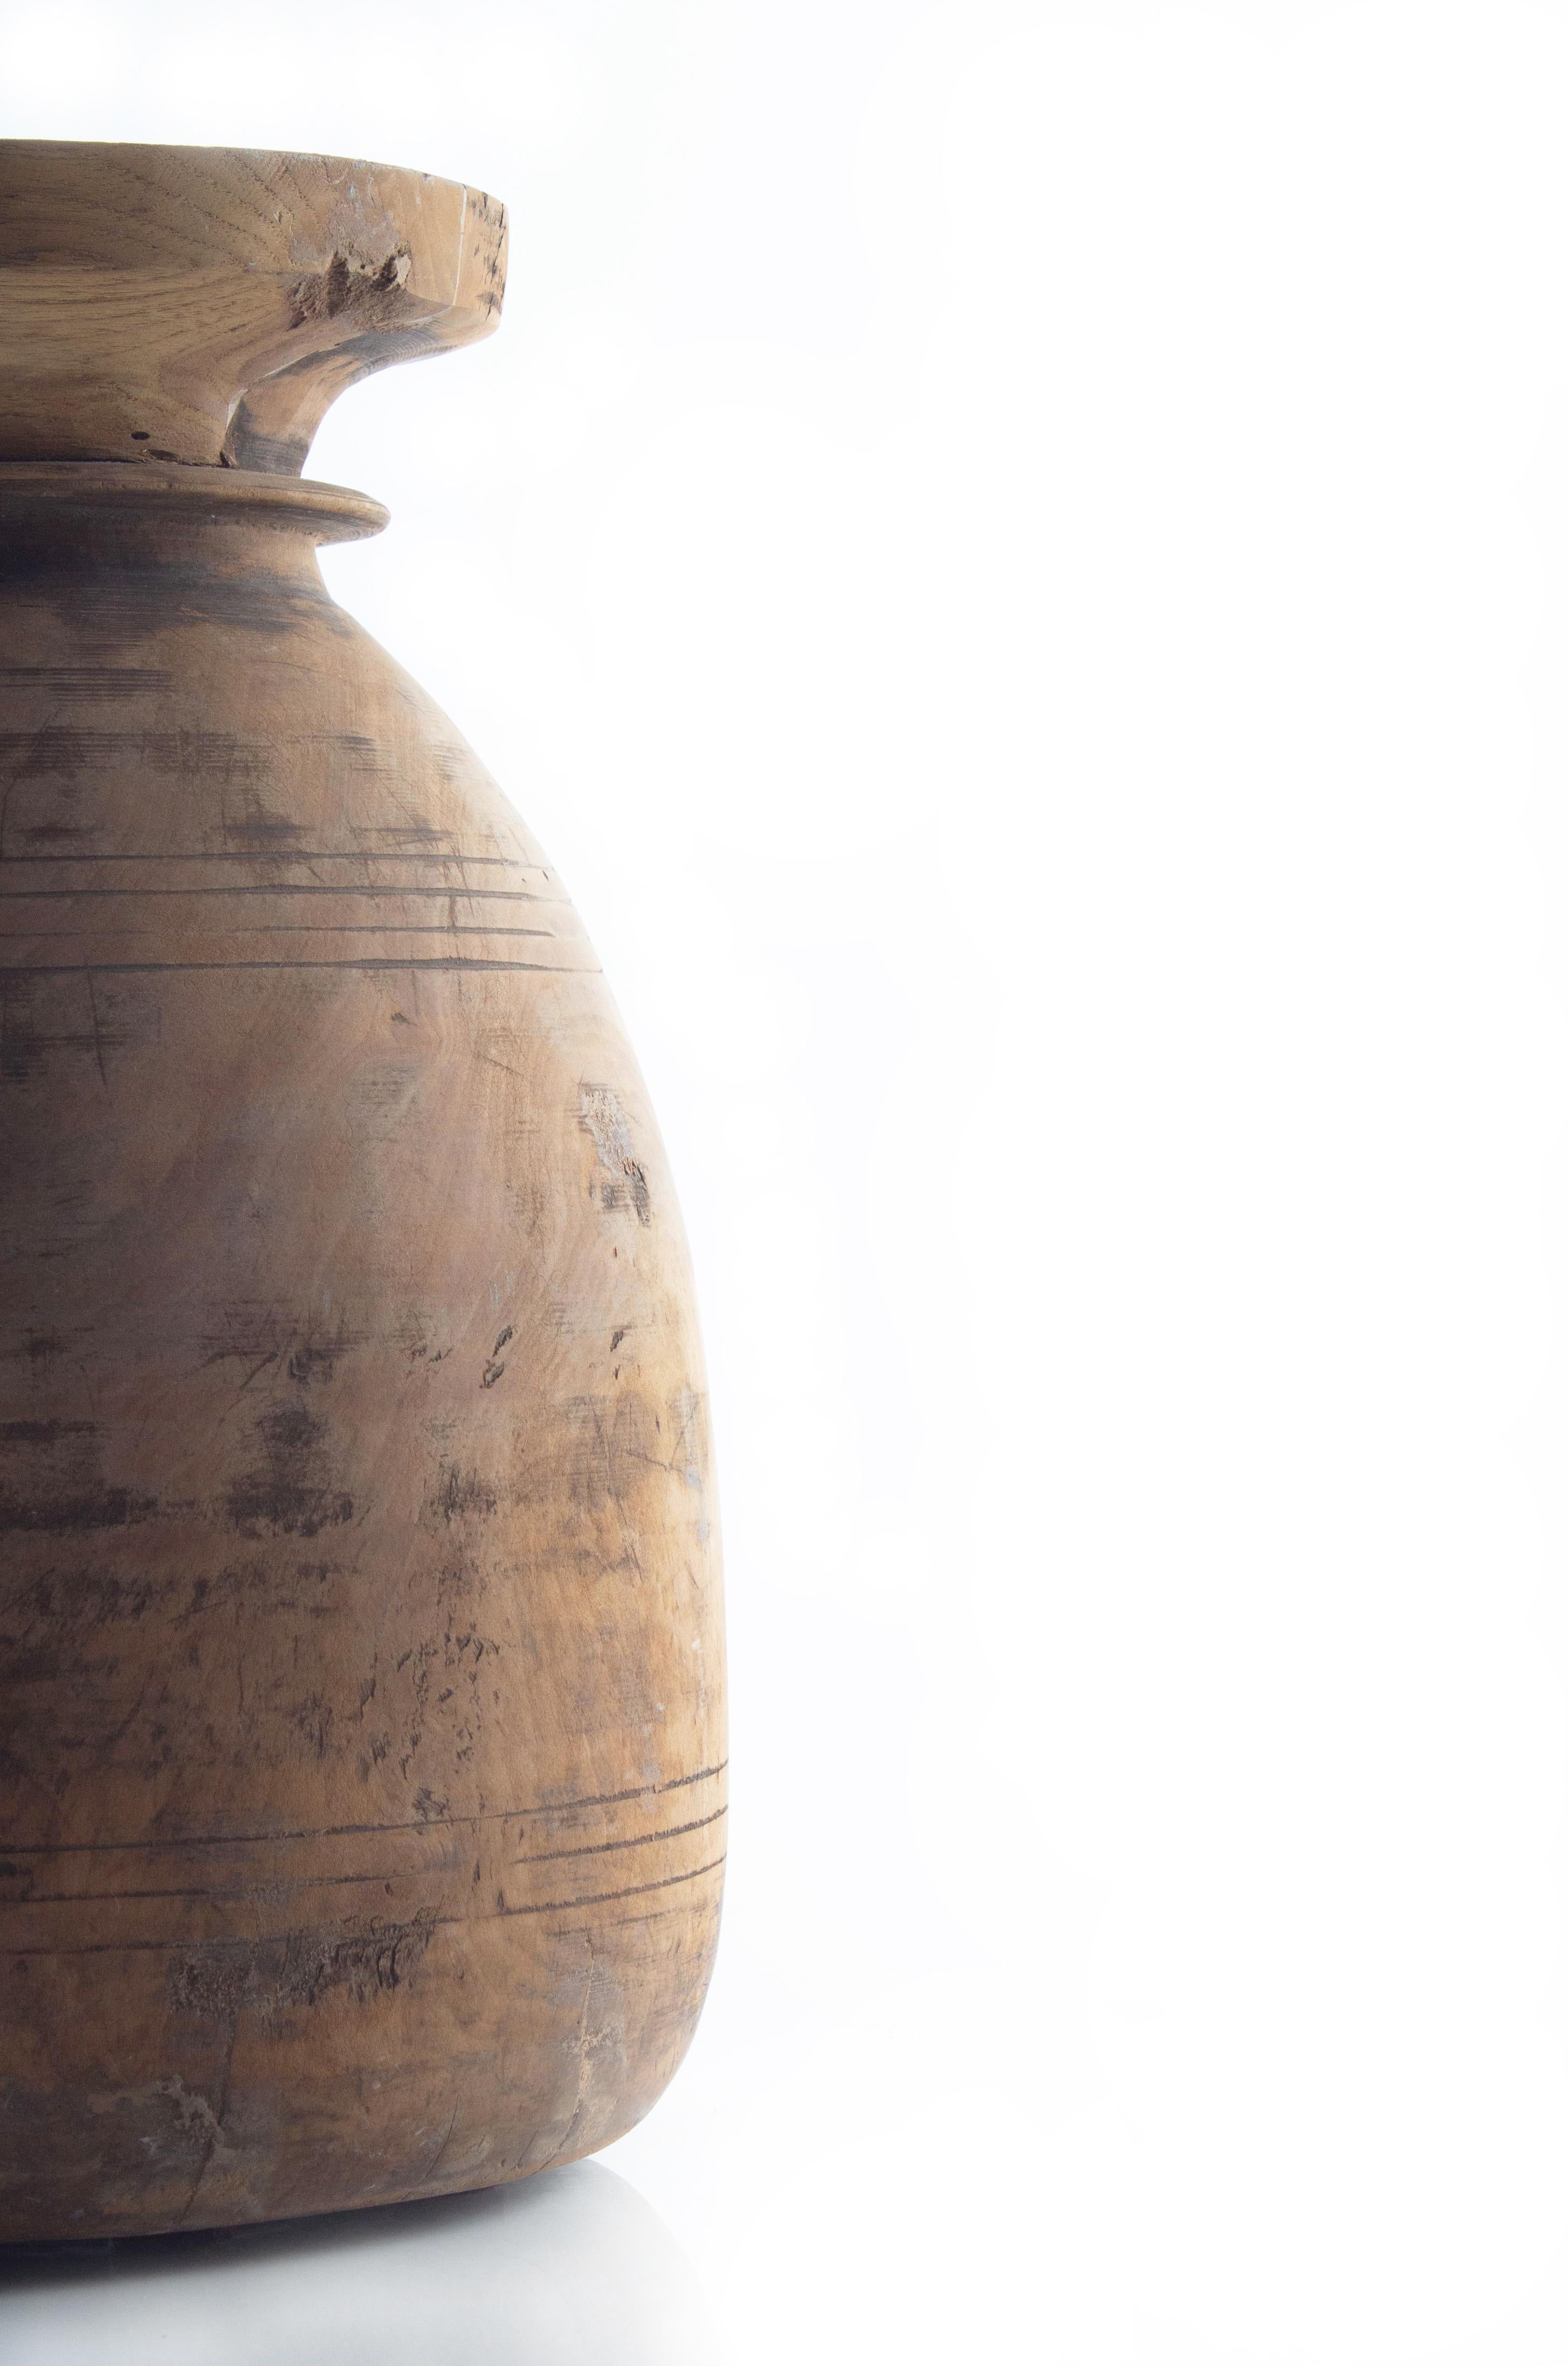 South Asian vintage hand-turned wooden storage jar.